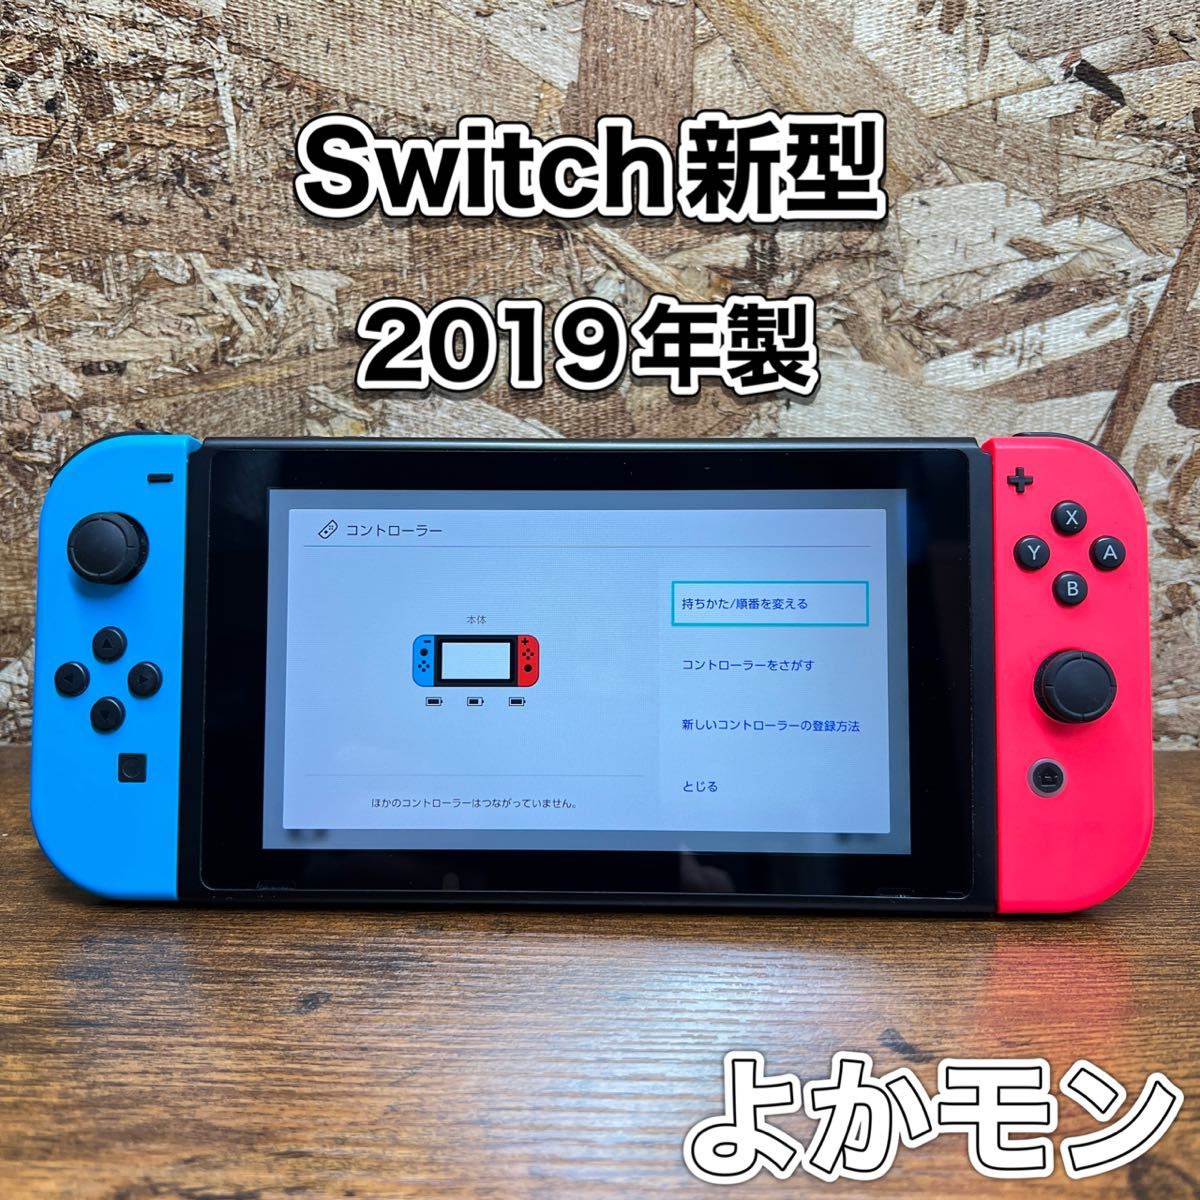 《Switch》新型・バッテリー強化モデル 本体 2019年製 Joy-Con セット ニンテンドースイッチ